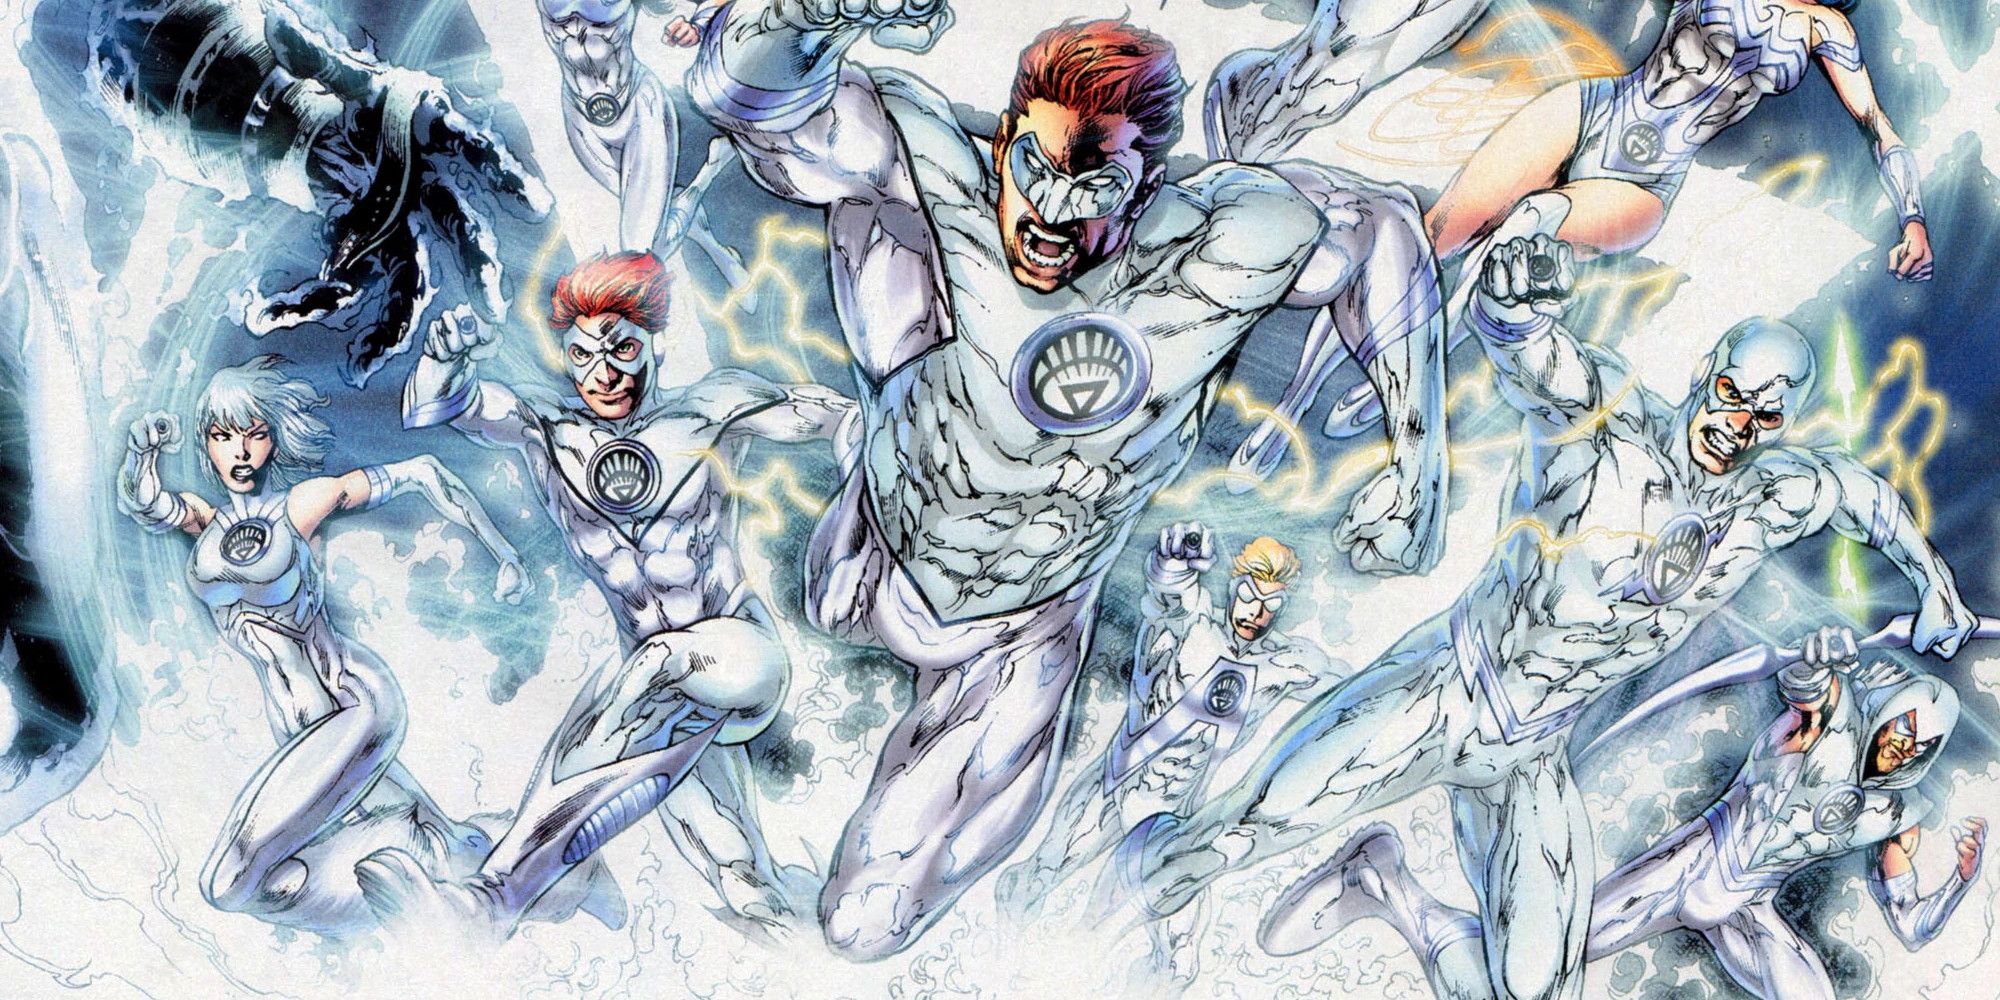 White Lanterns Return in Huge Justice League Twist 